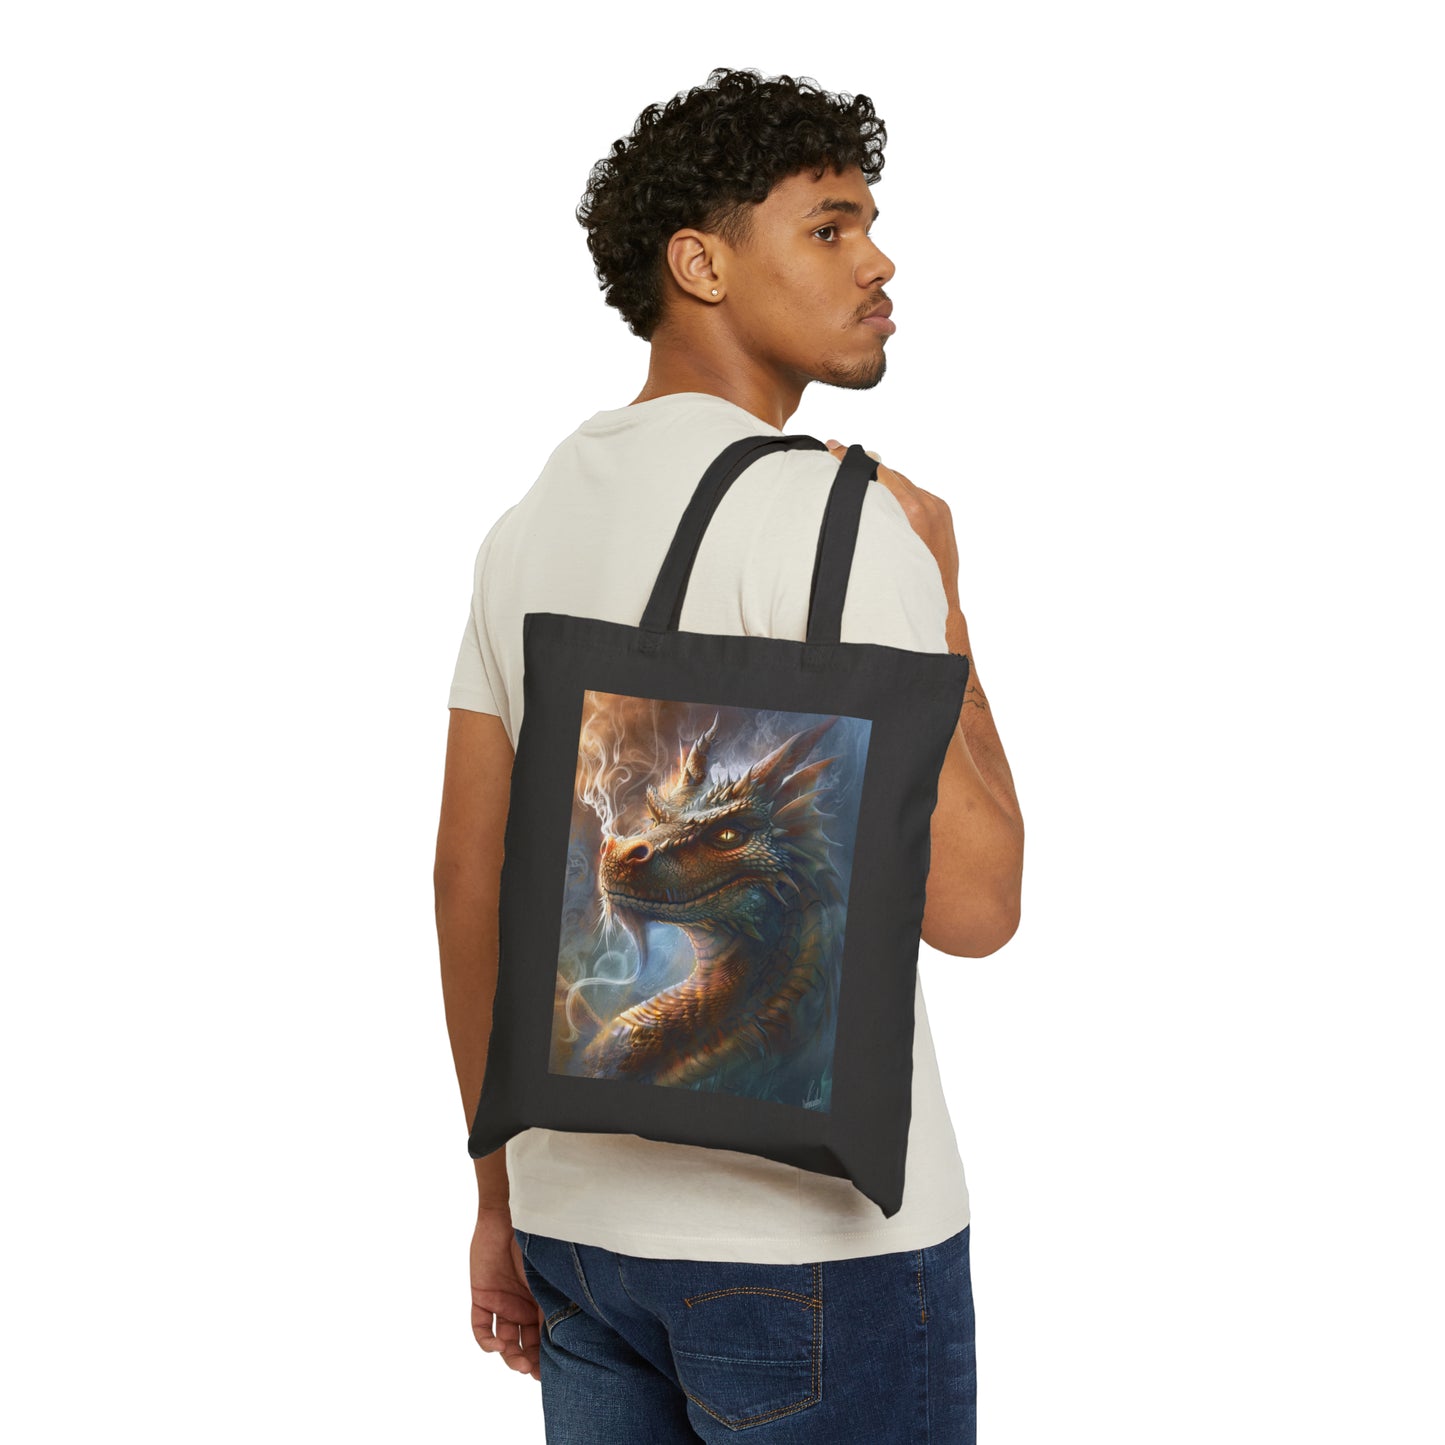 Cotton Canvas Tote Bag: Smoking Dragon